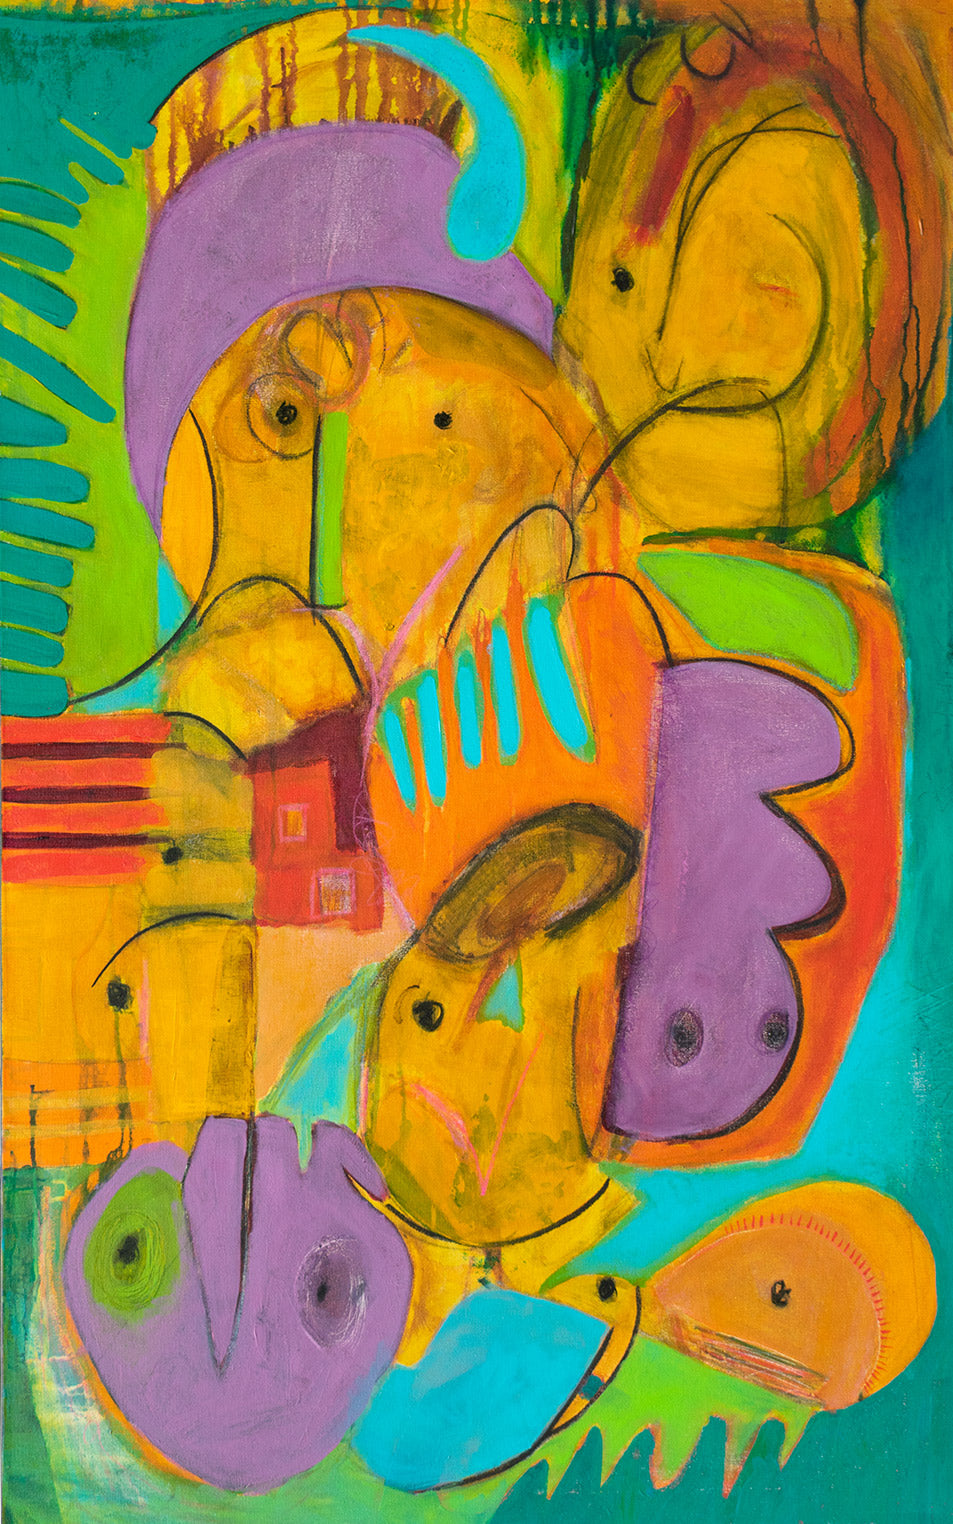 Kith and Kin - bkj-004-19-C - Brenda Jackson Studio Abstract Painting